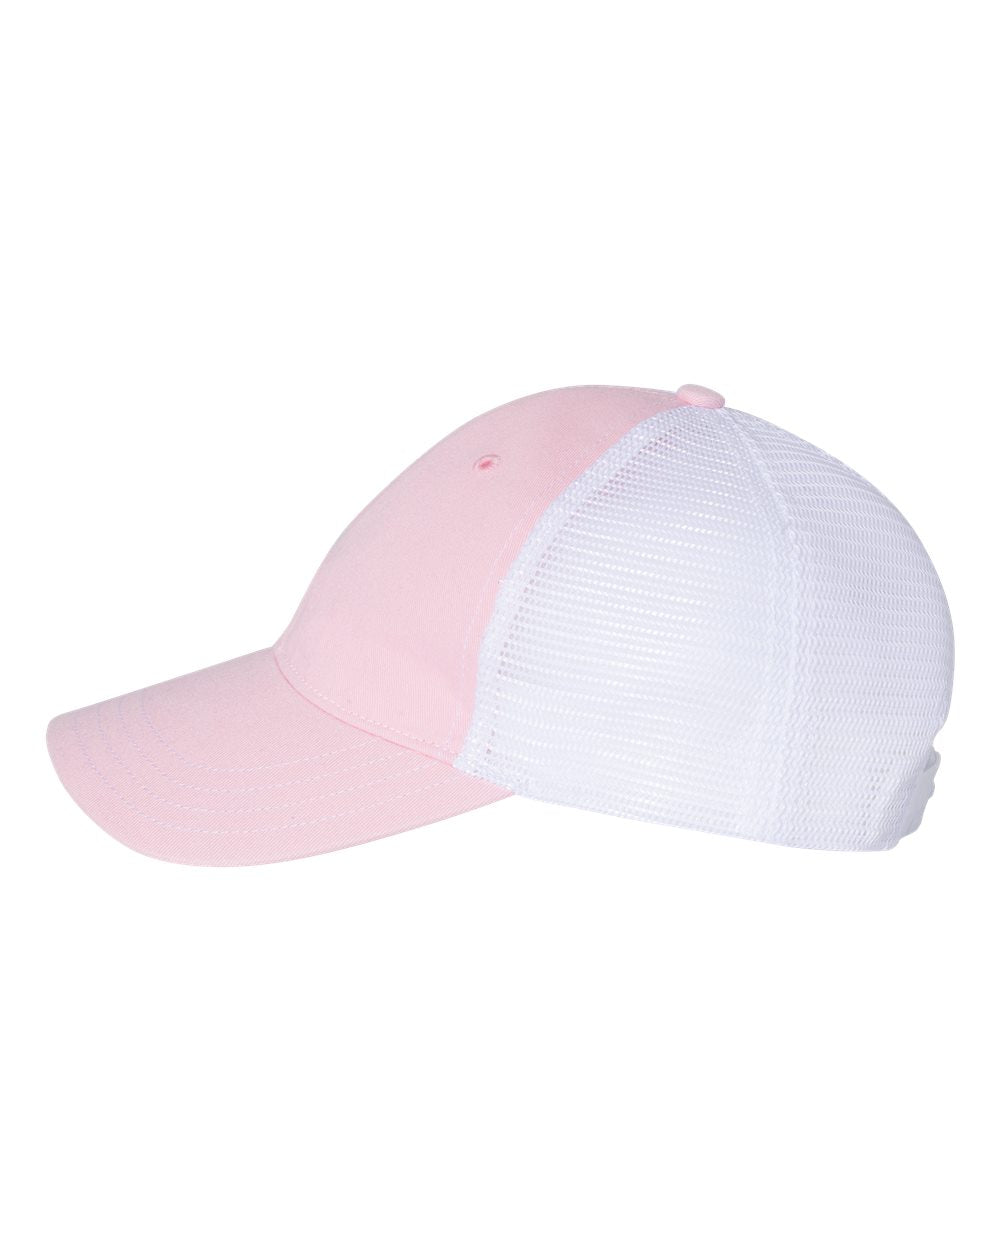 Richardson Garment-Washed Branded Trucker Caps, Pink White